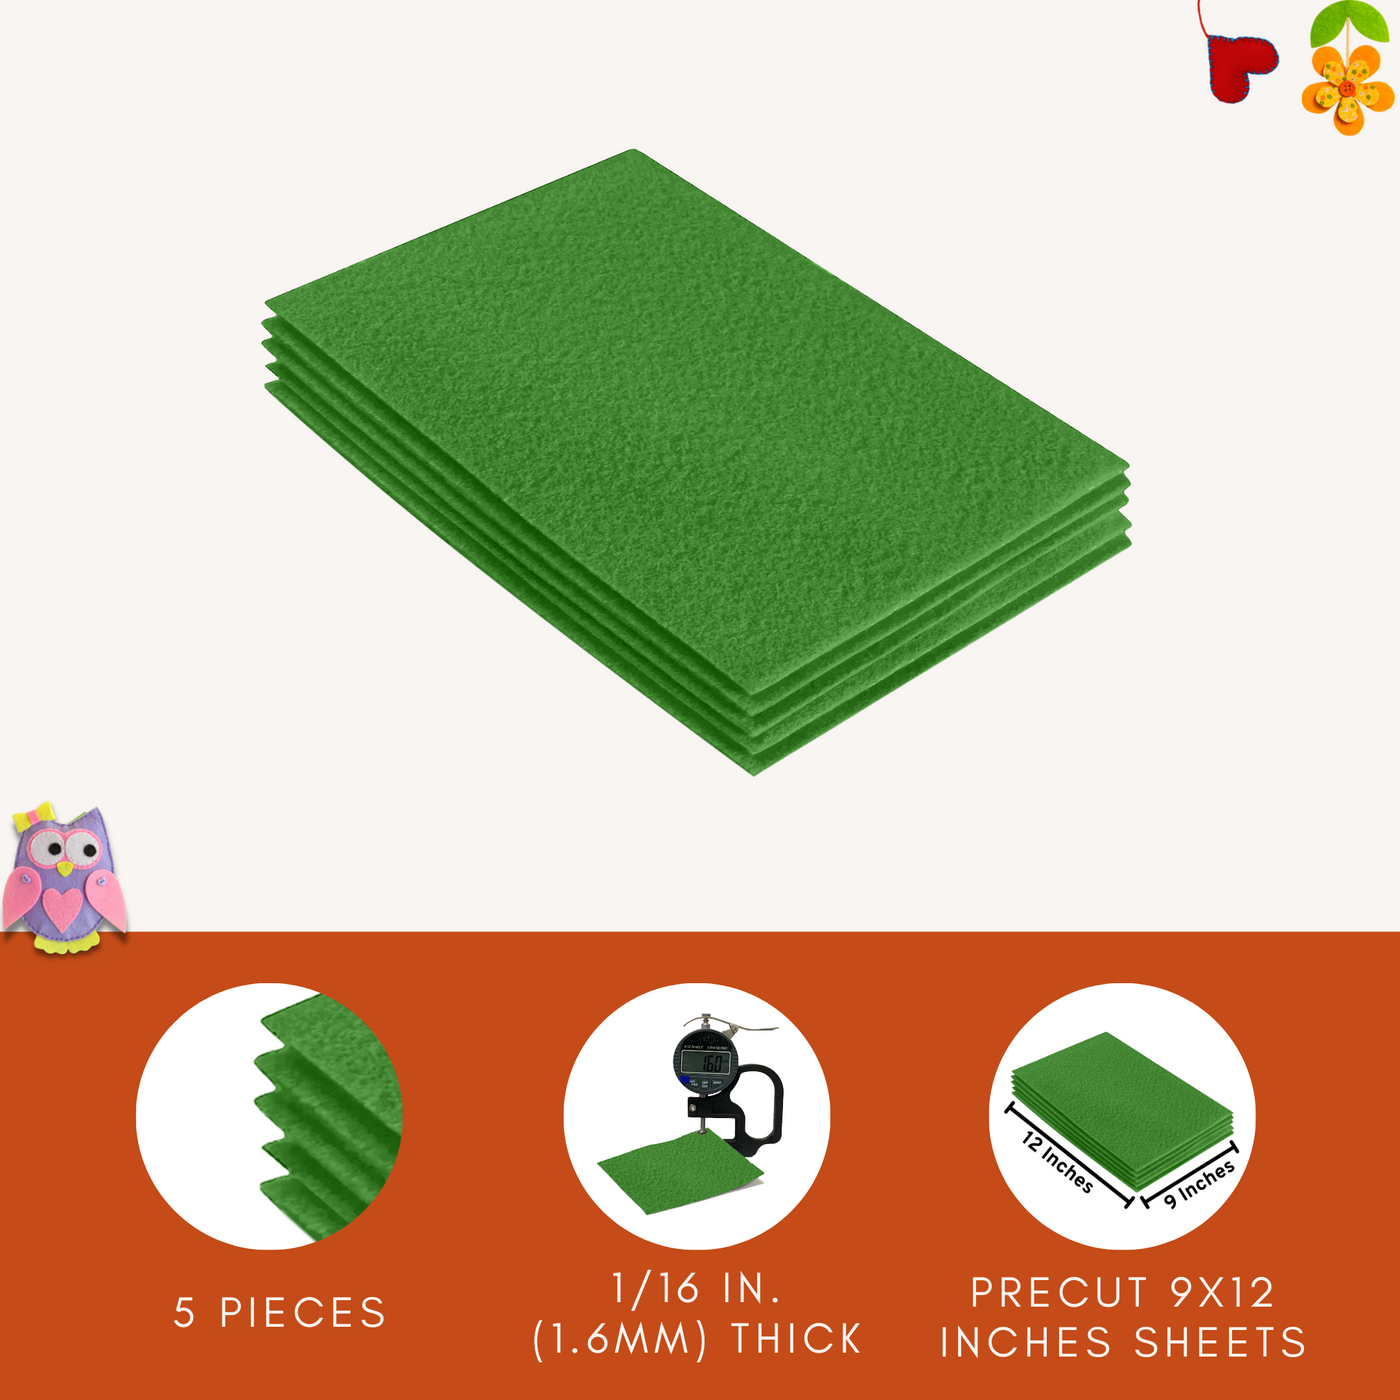 Acrylic Felt 9"X12" Sheet Packs | Green - FabricLA.com